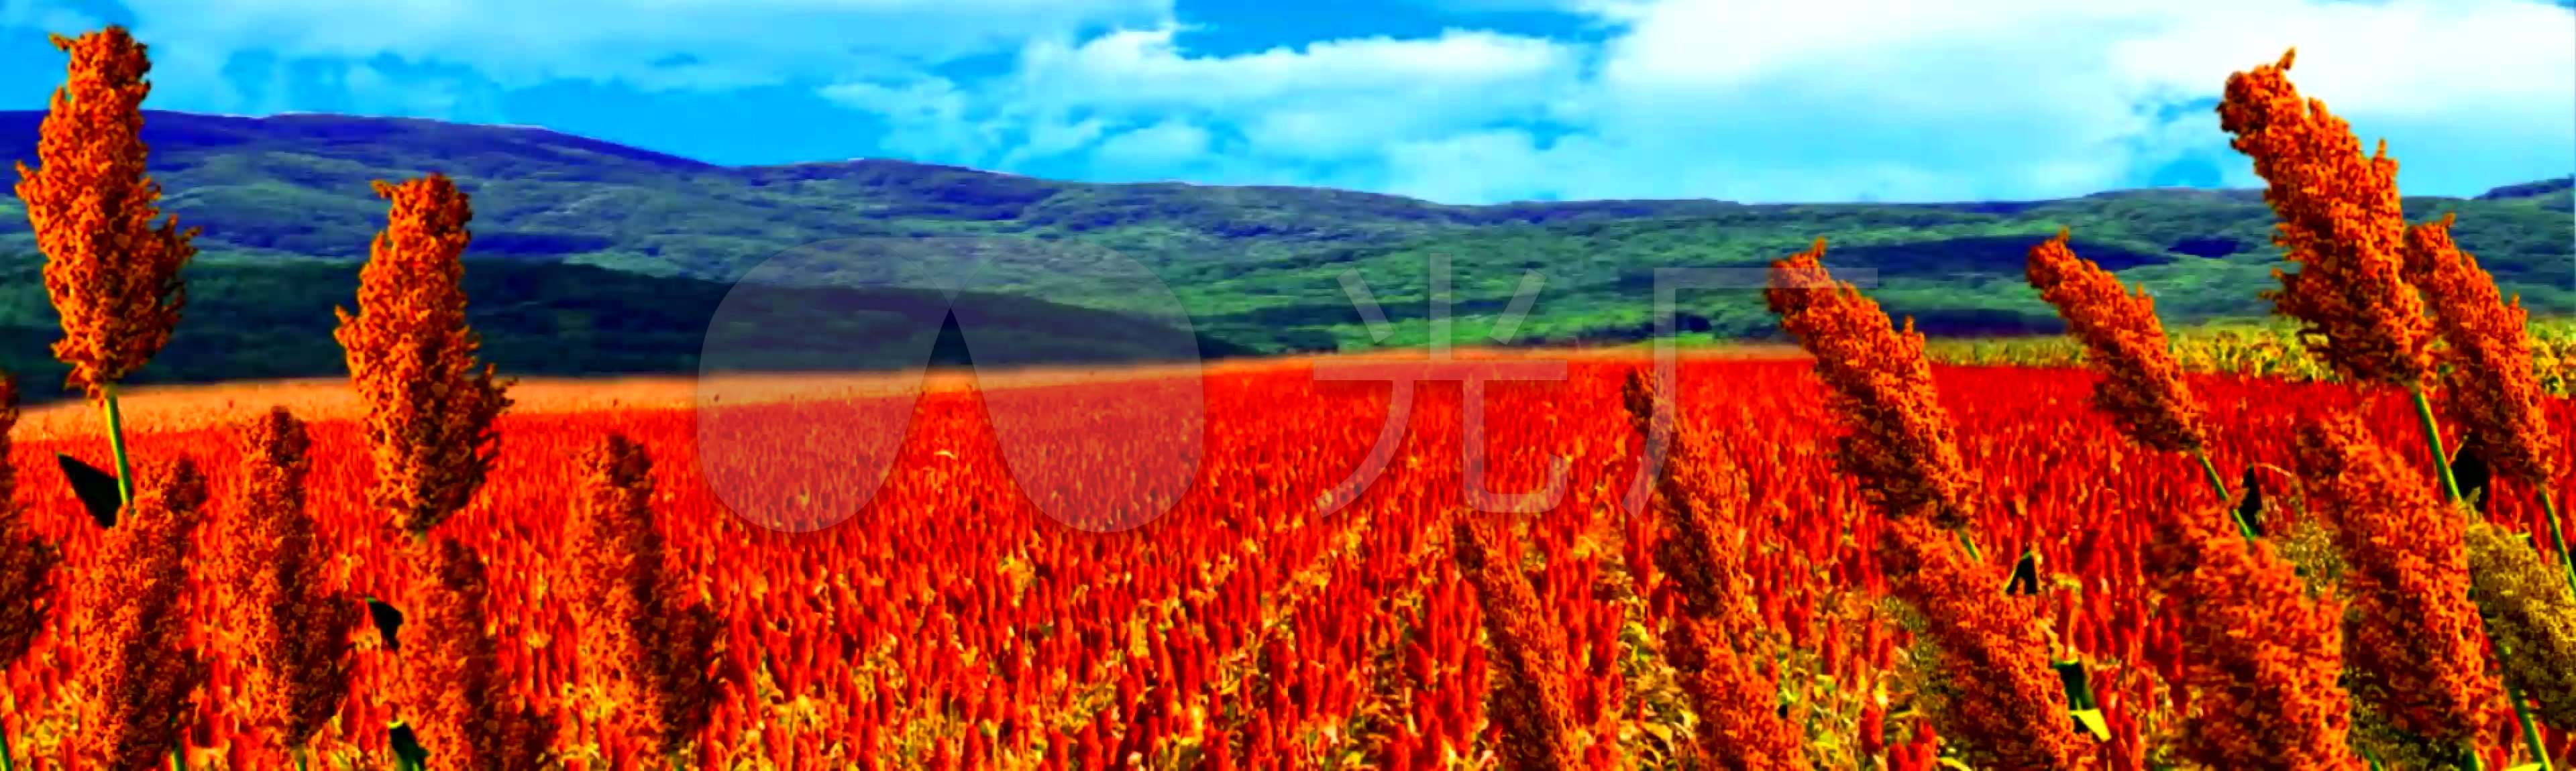 DAO-84544 | 高粱種植,高粱,Sorghum bicolor,二色高粱,蜀黍,五穀雜糧,.禾本科,草本植物,農… | Flickr